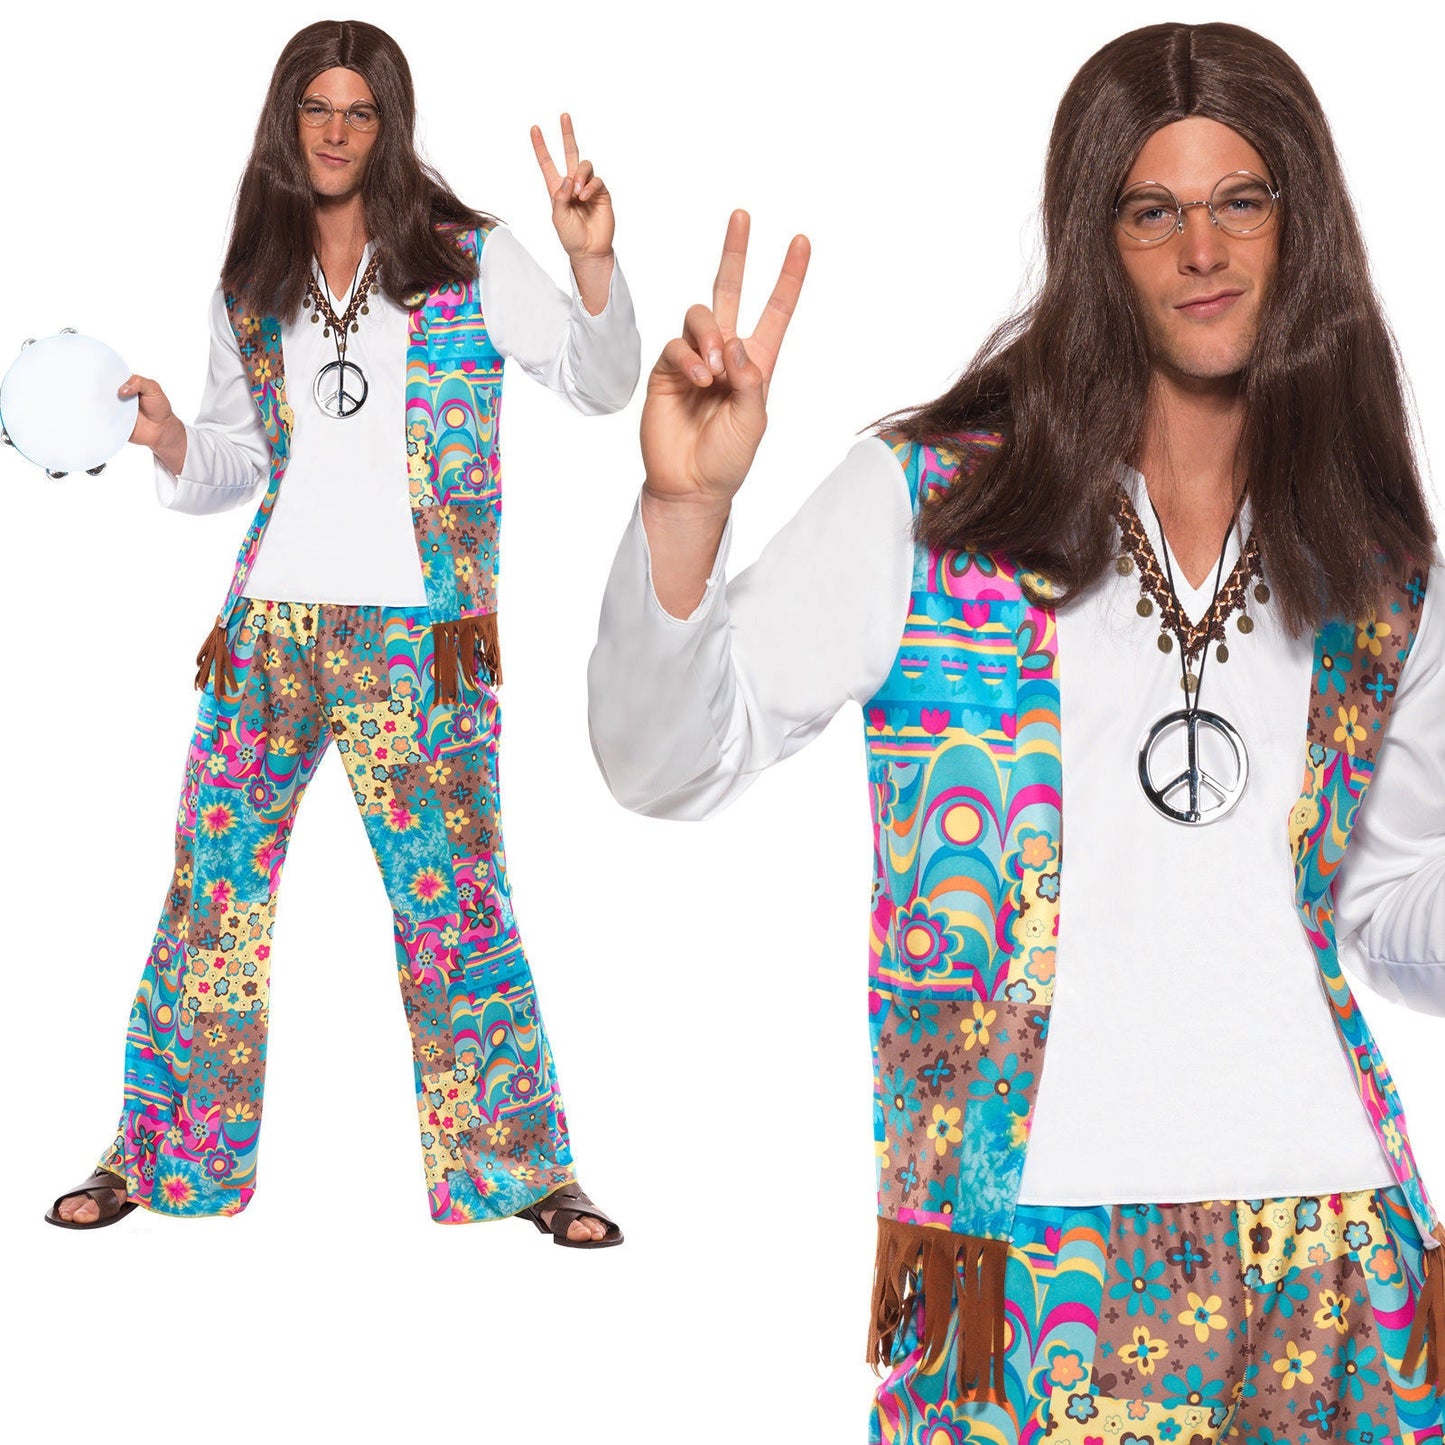 Groovy Hippie Mens Costume